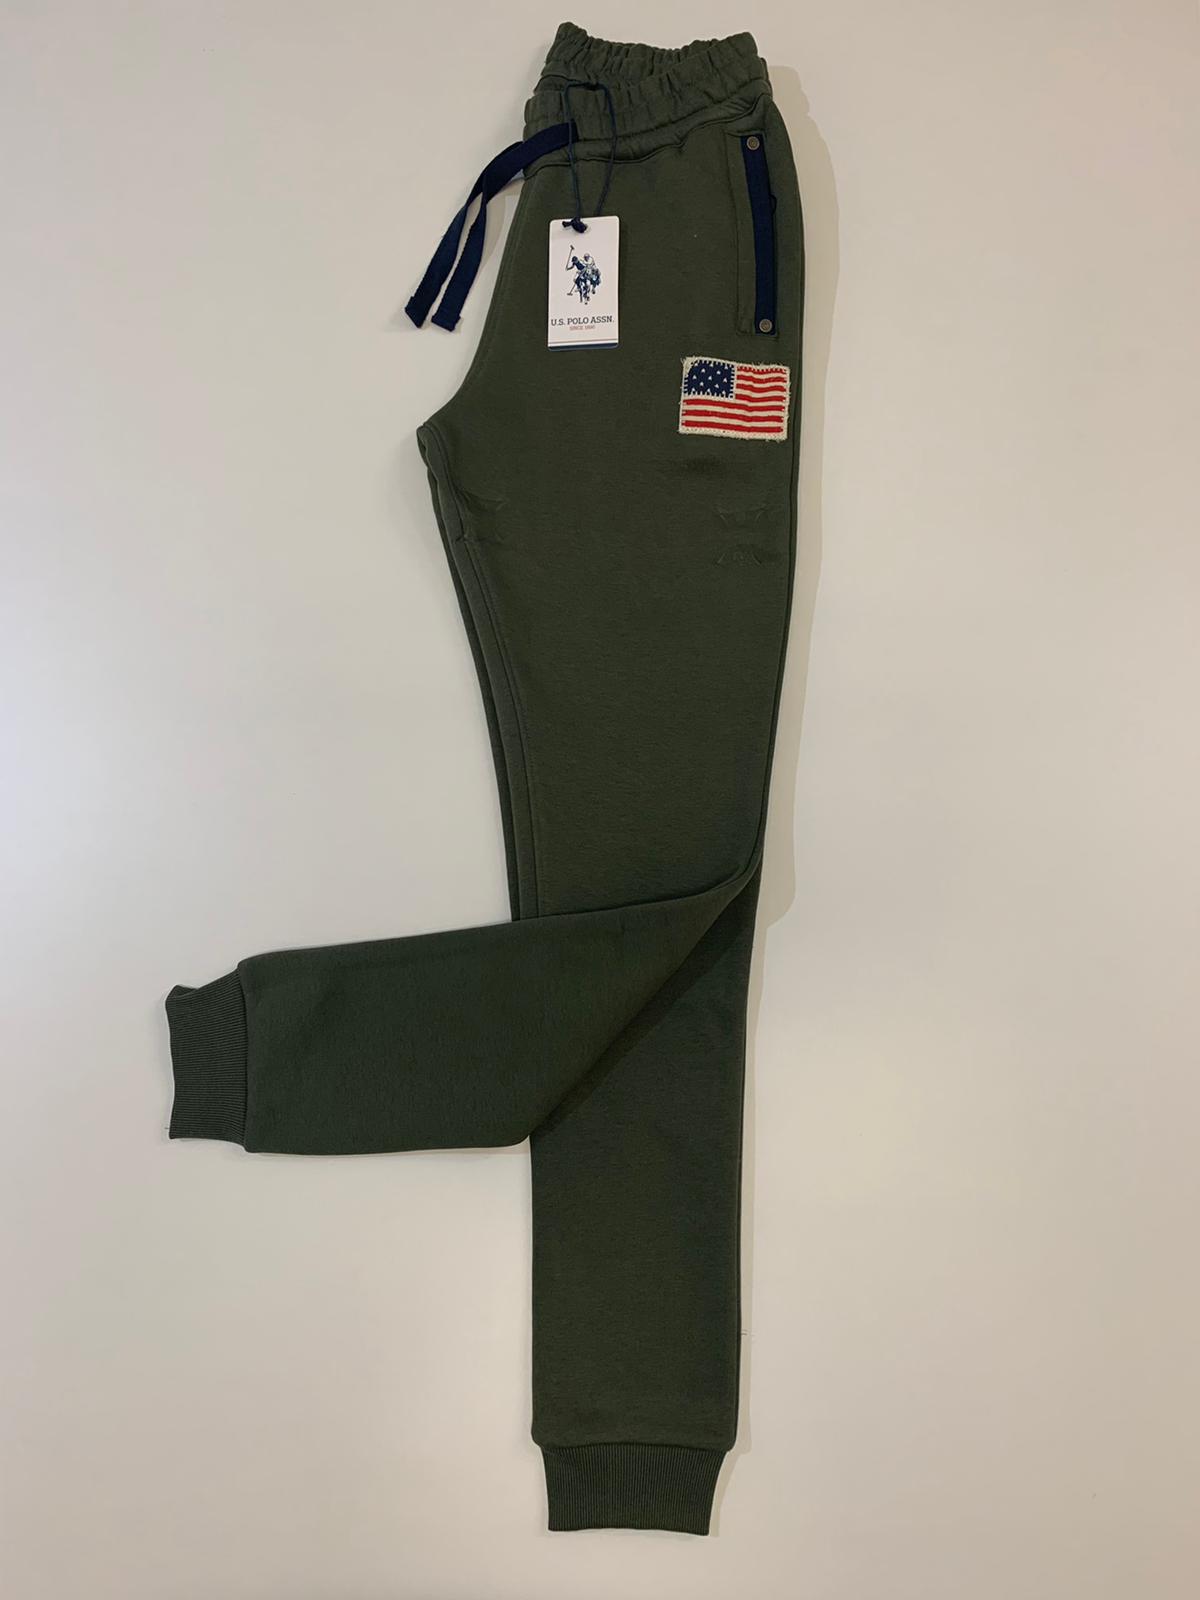 Pantalone Uomo US Polo Felpato Militare